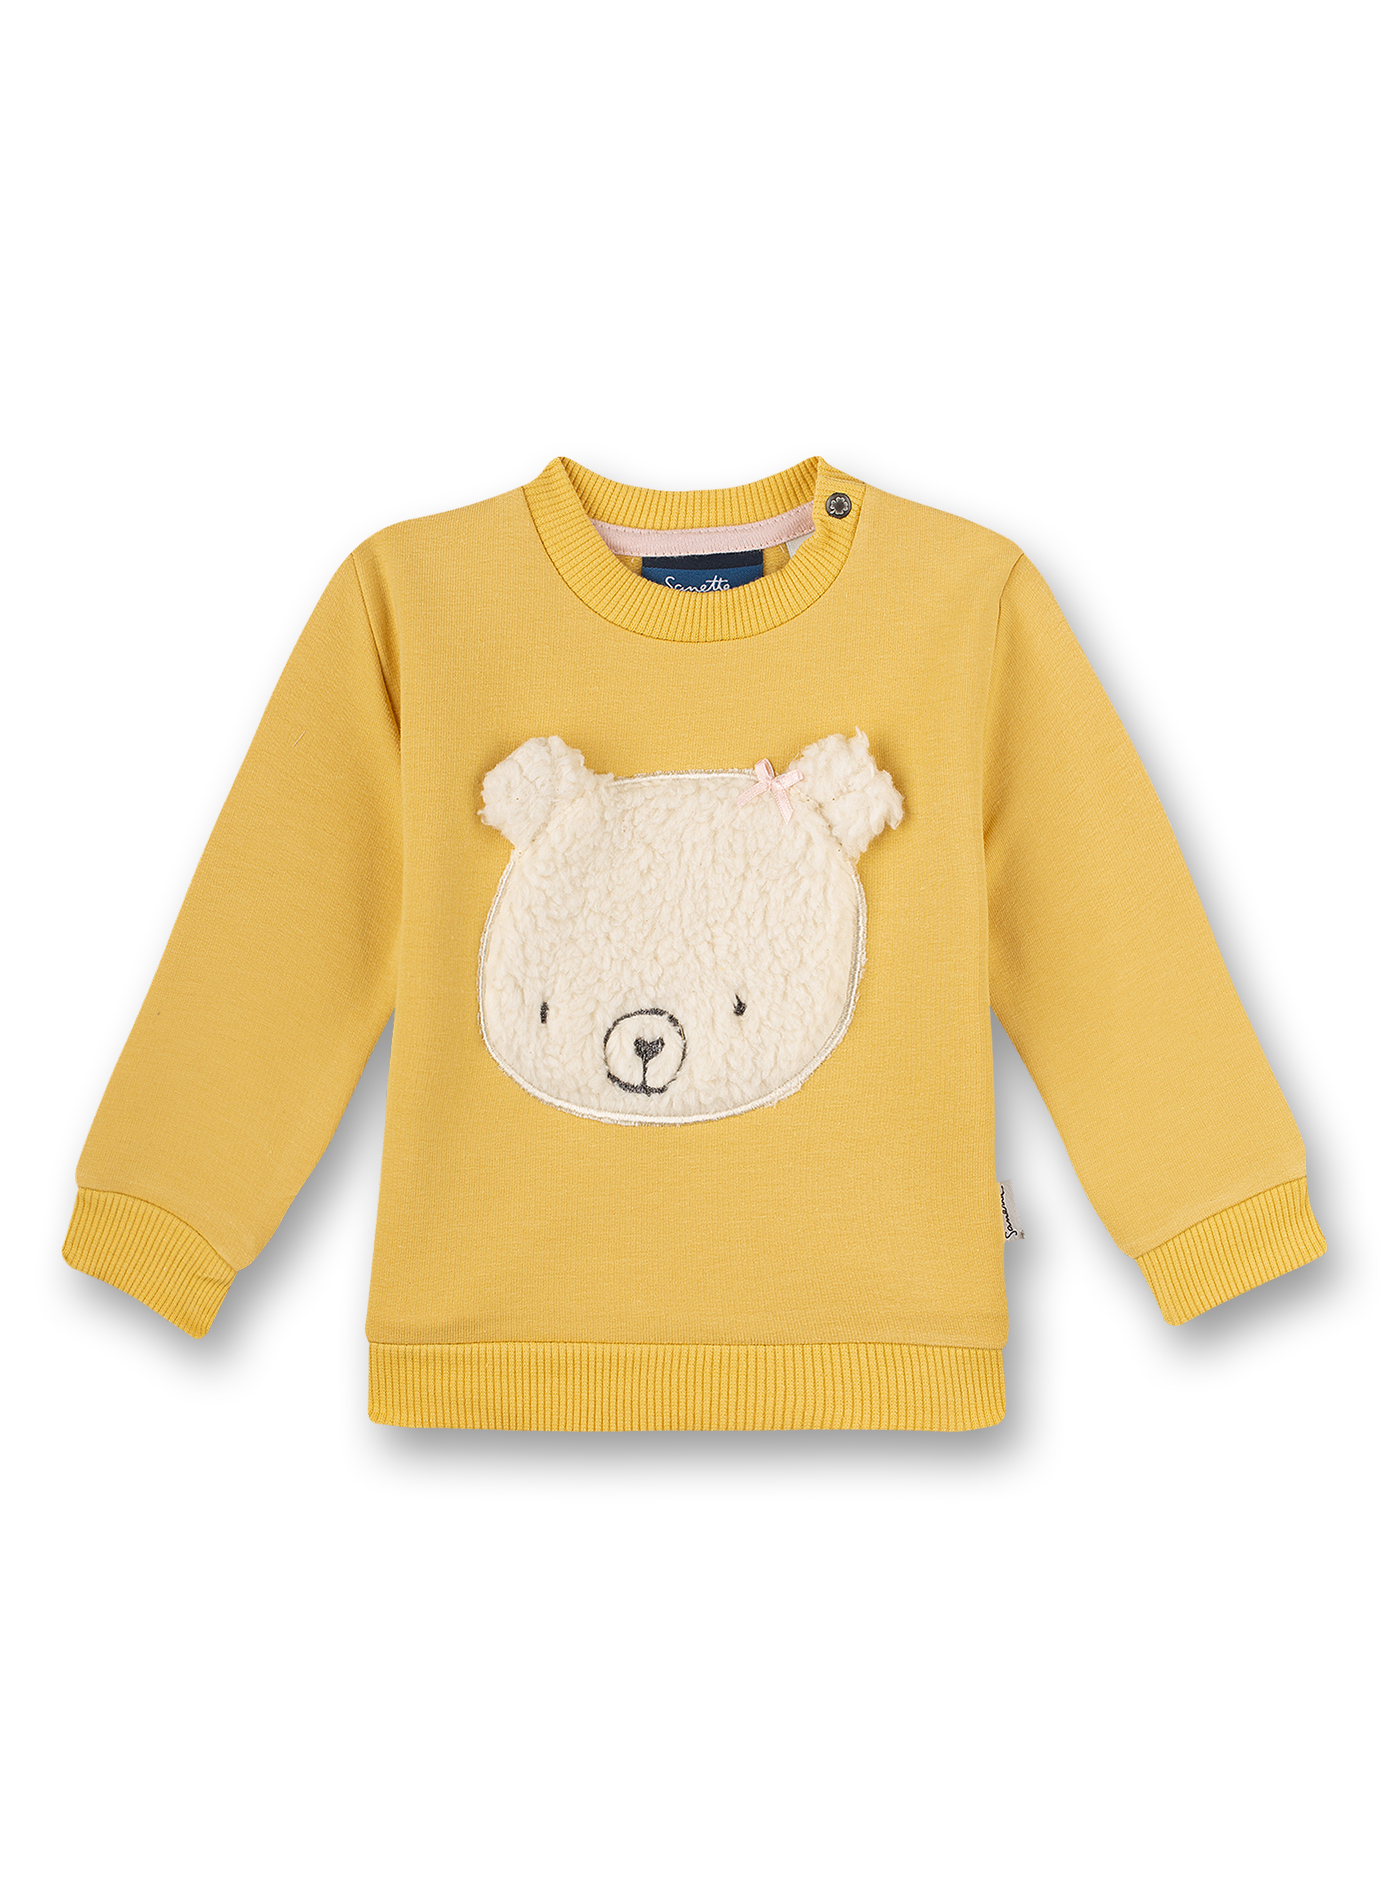 Mädchen-Sweatshirt Gelb Little Bear